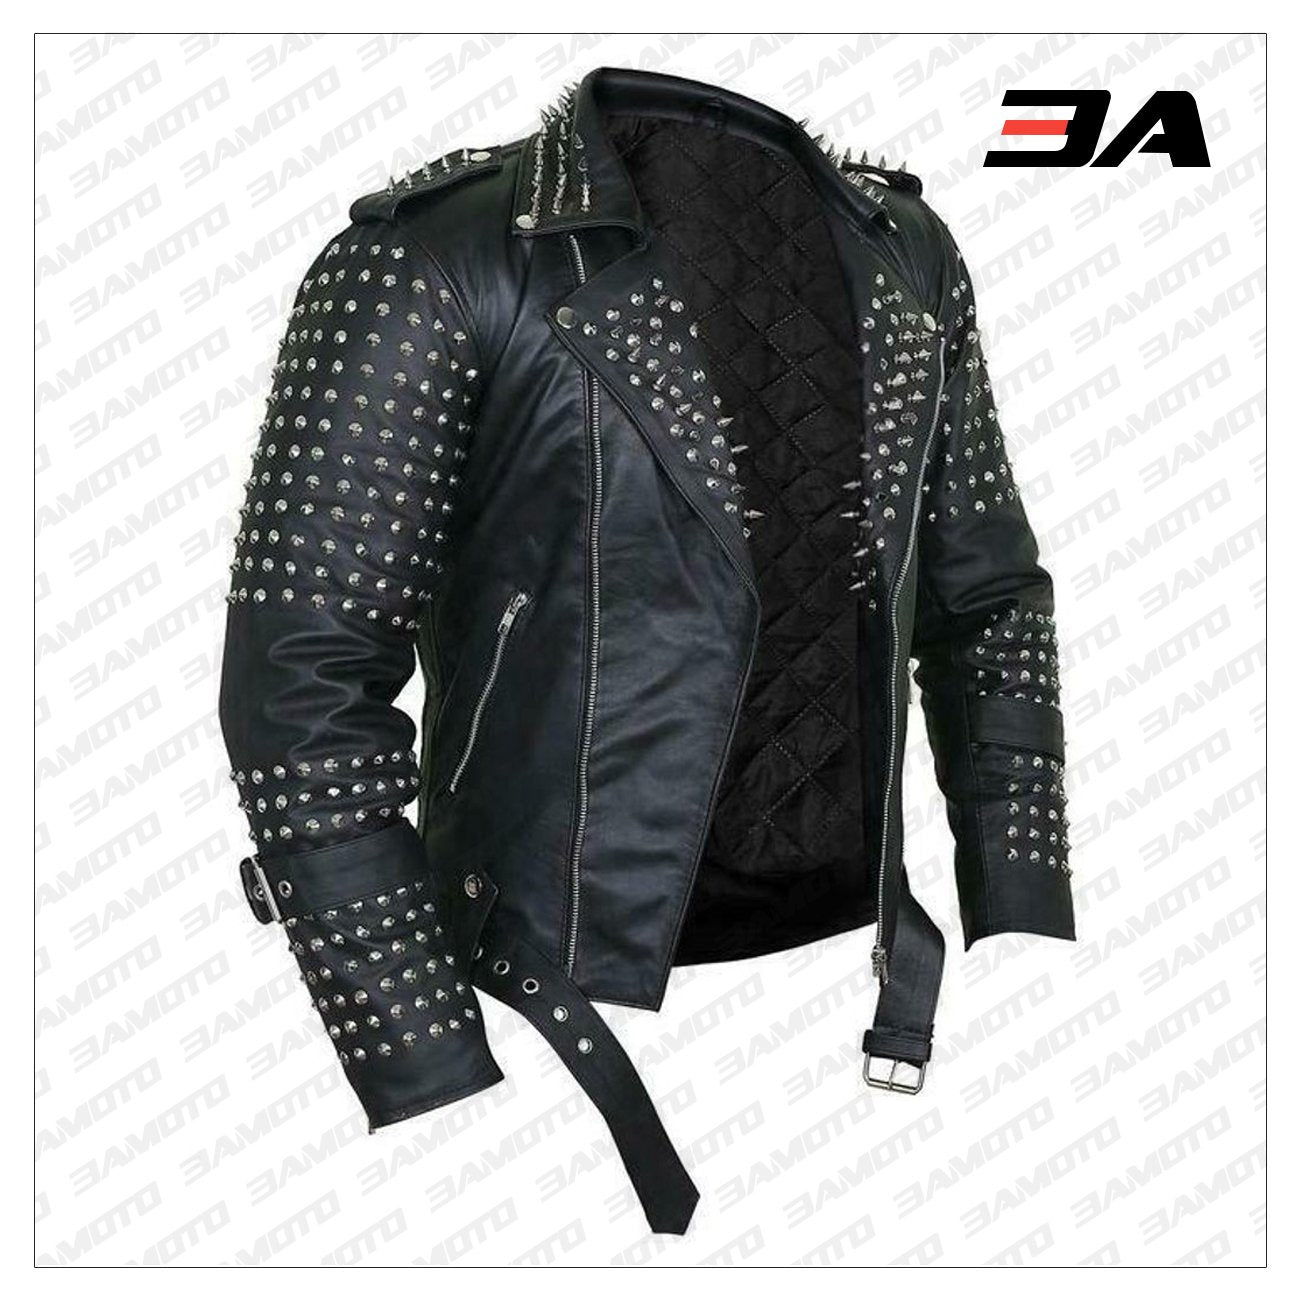 Studded Motorcycle Leather Jacket